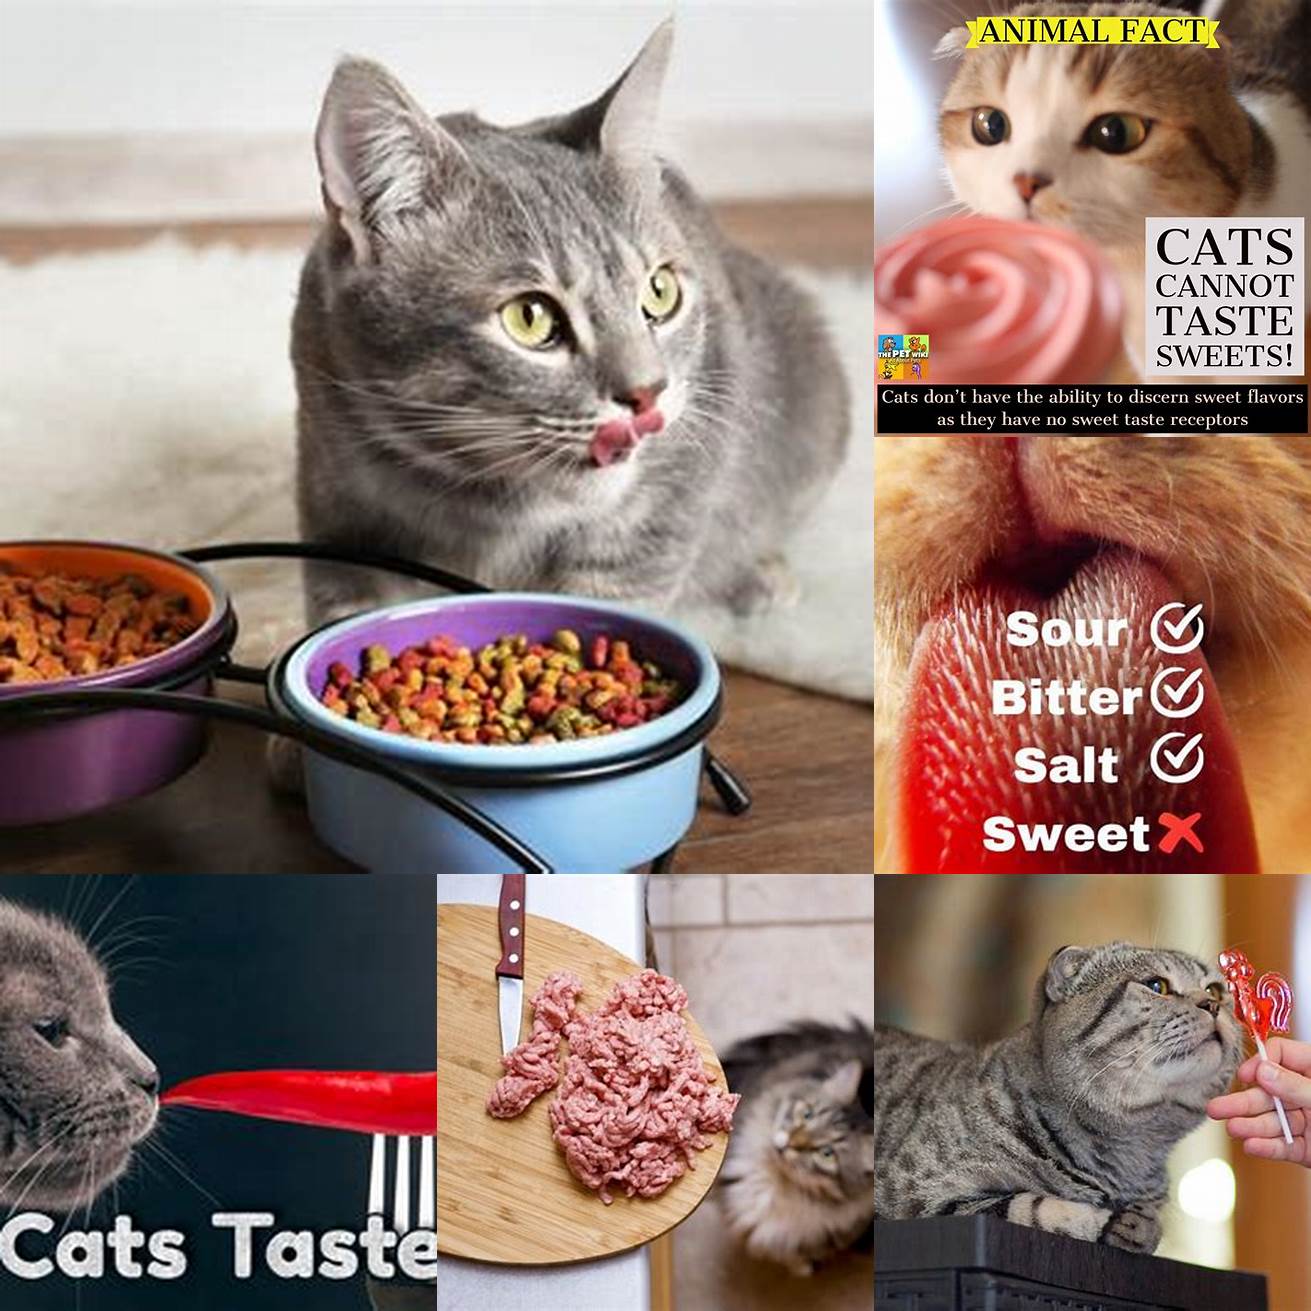 Cat tasting different flavors